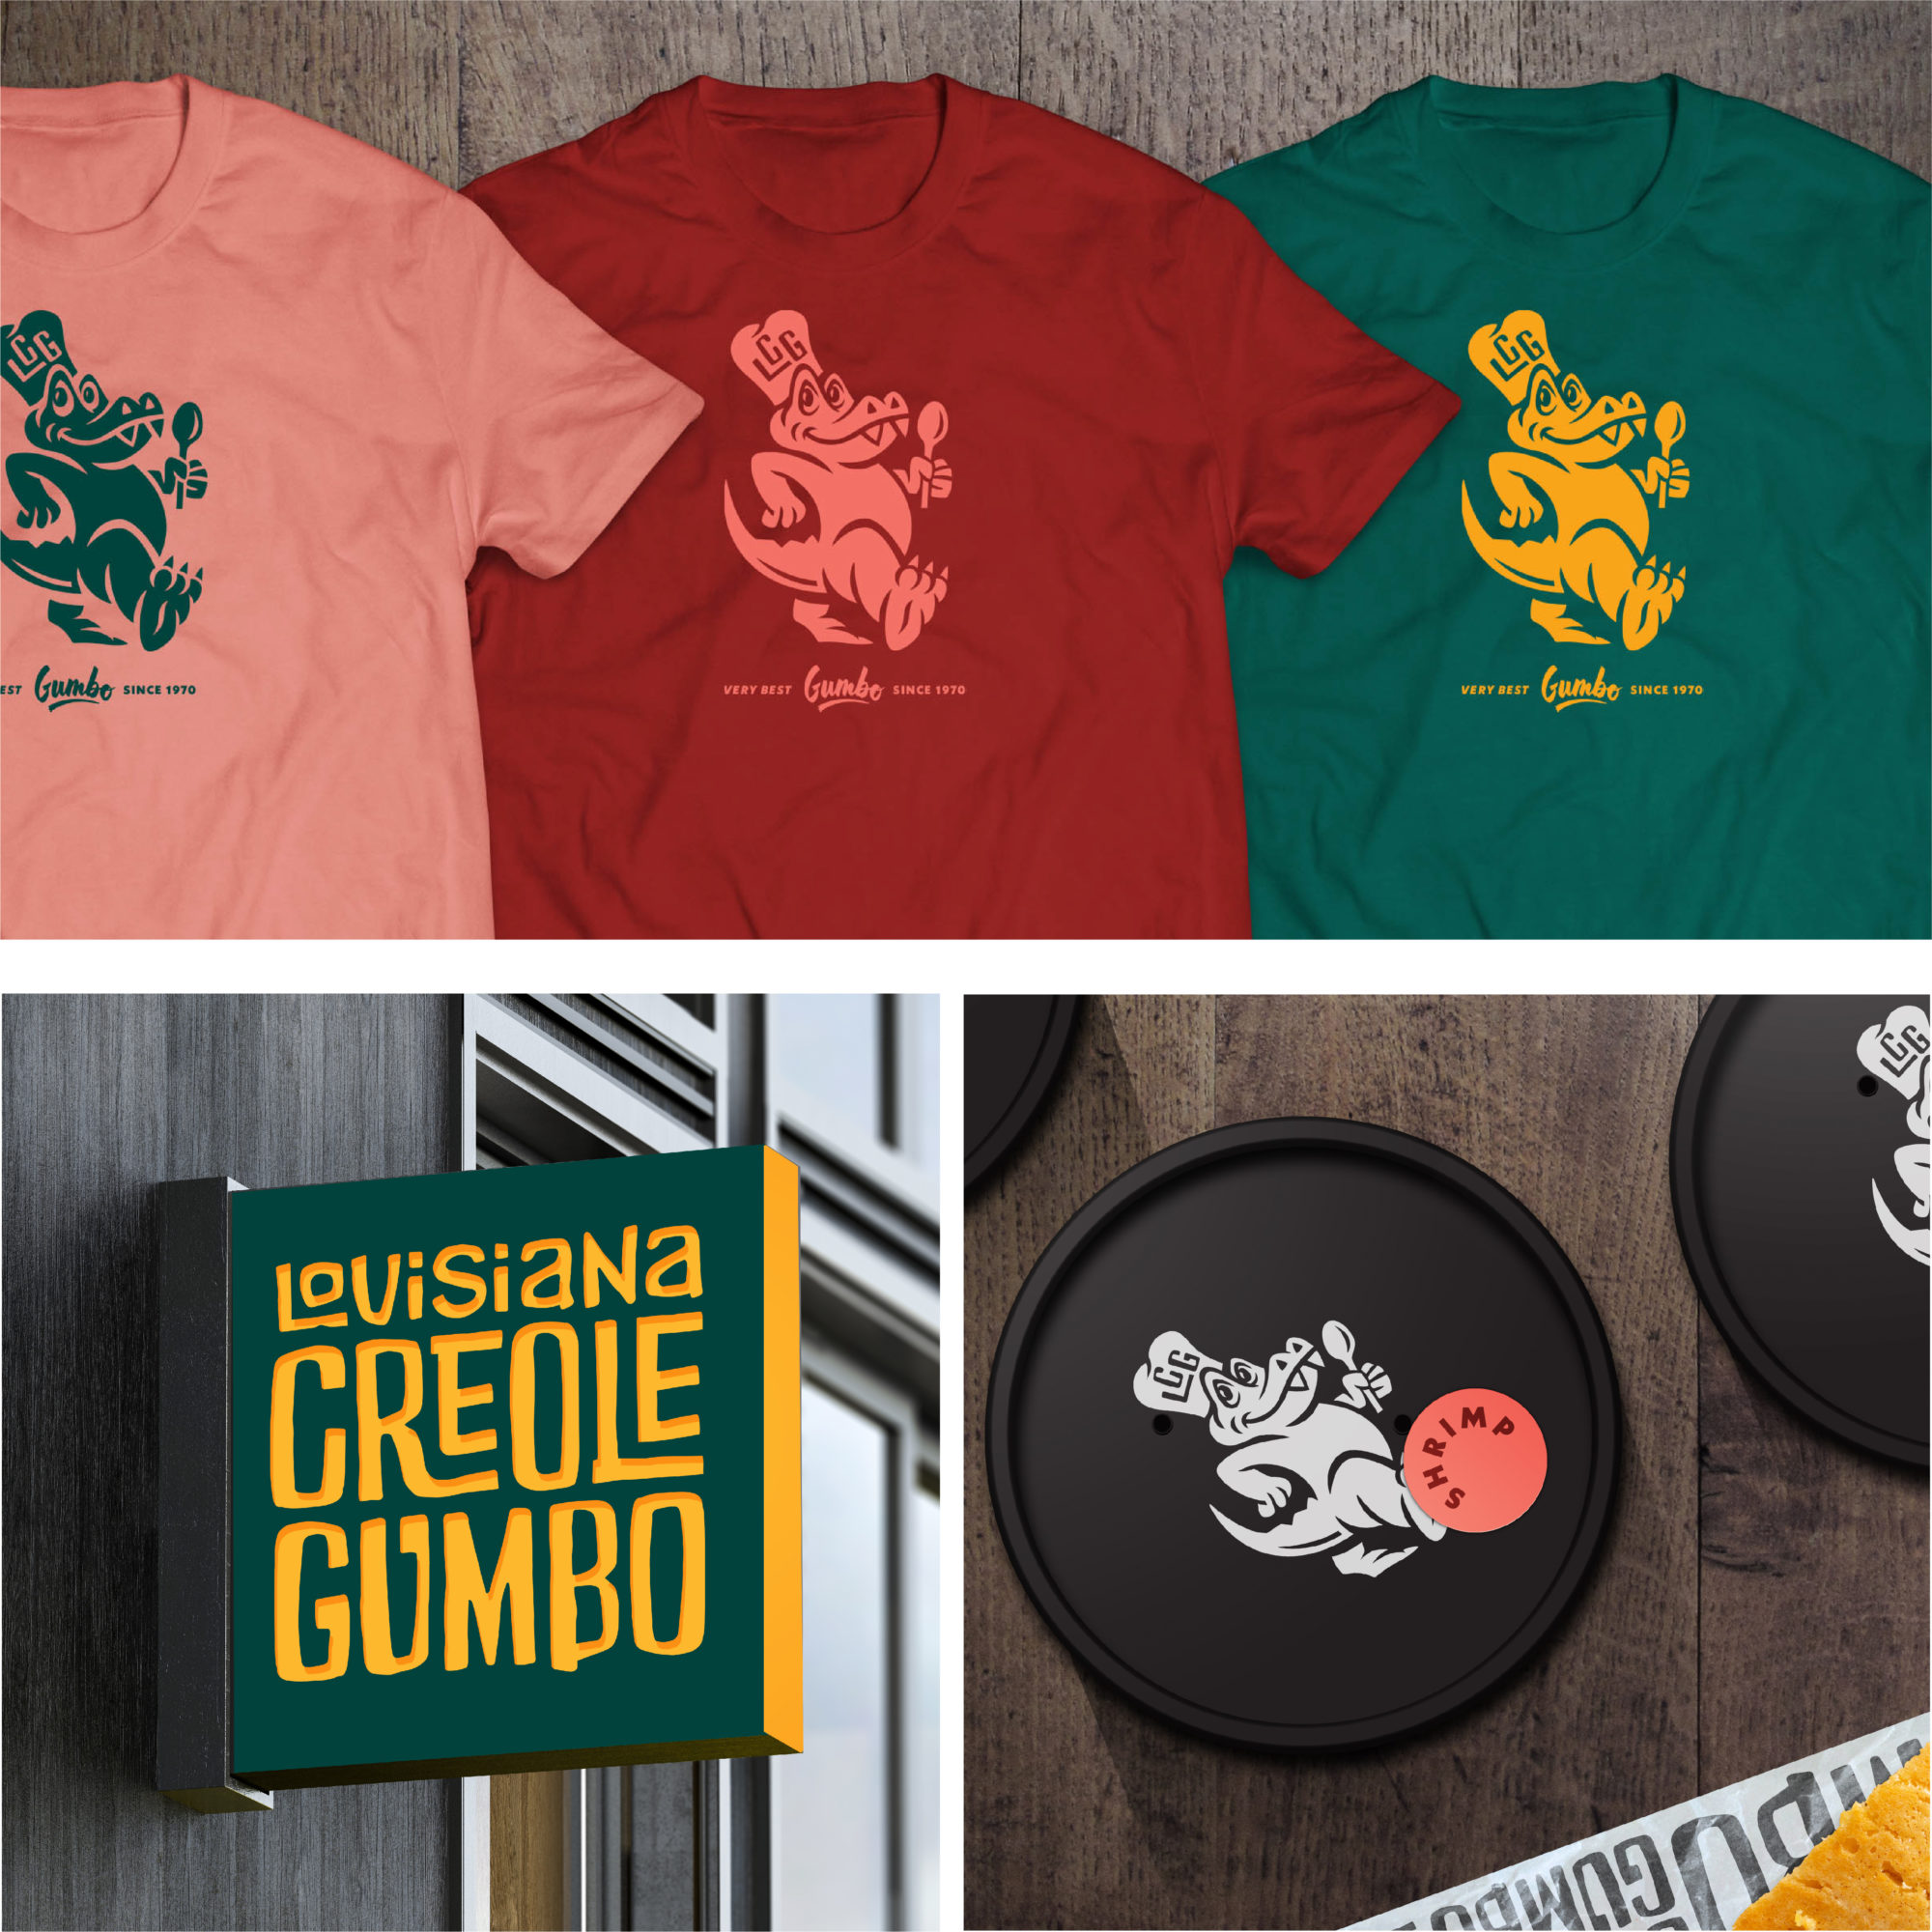 Louisiana Creole Gumbo Brand Collateral